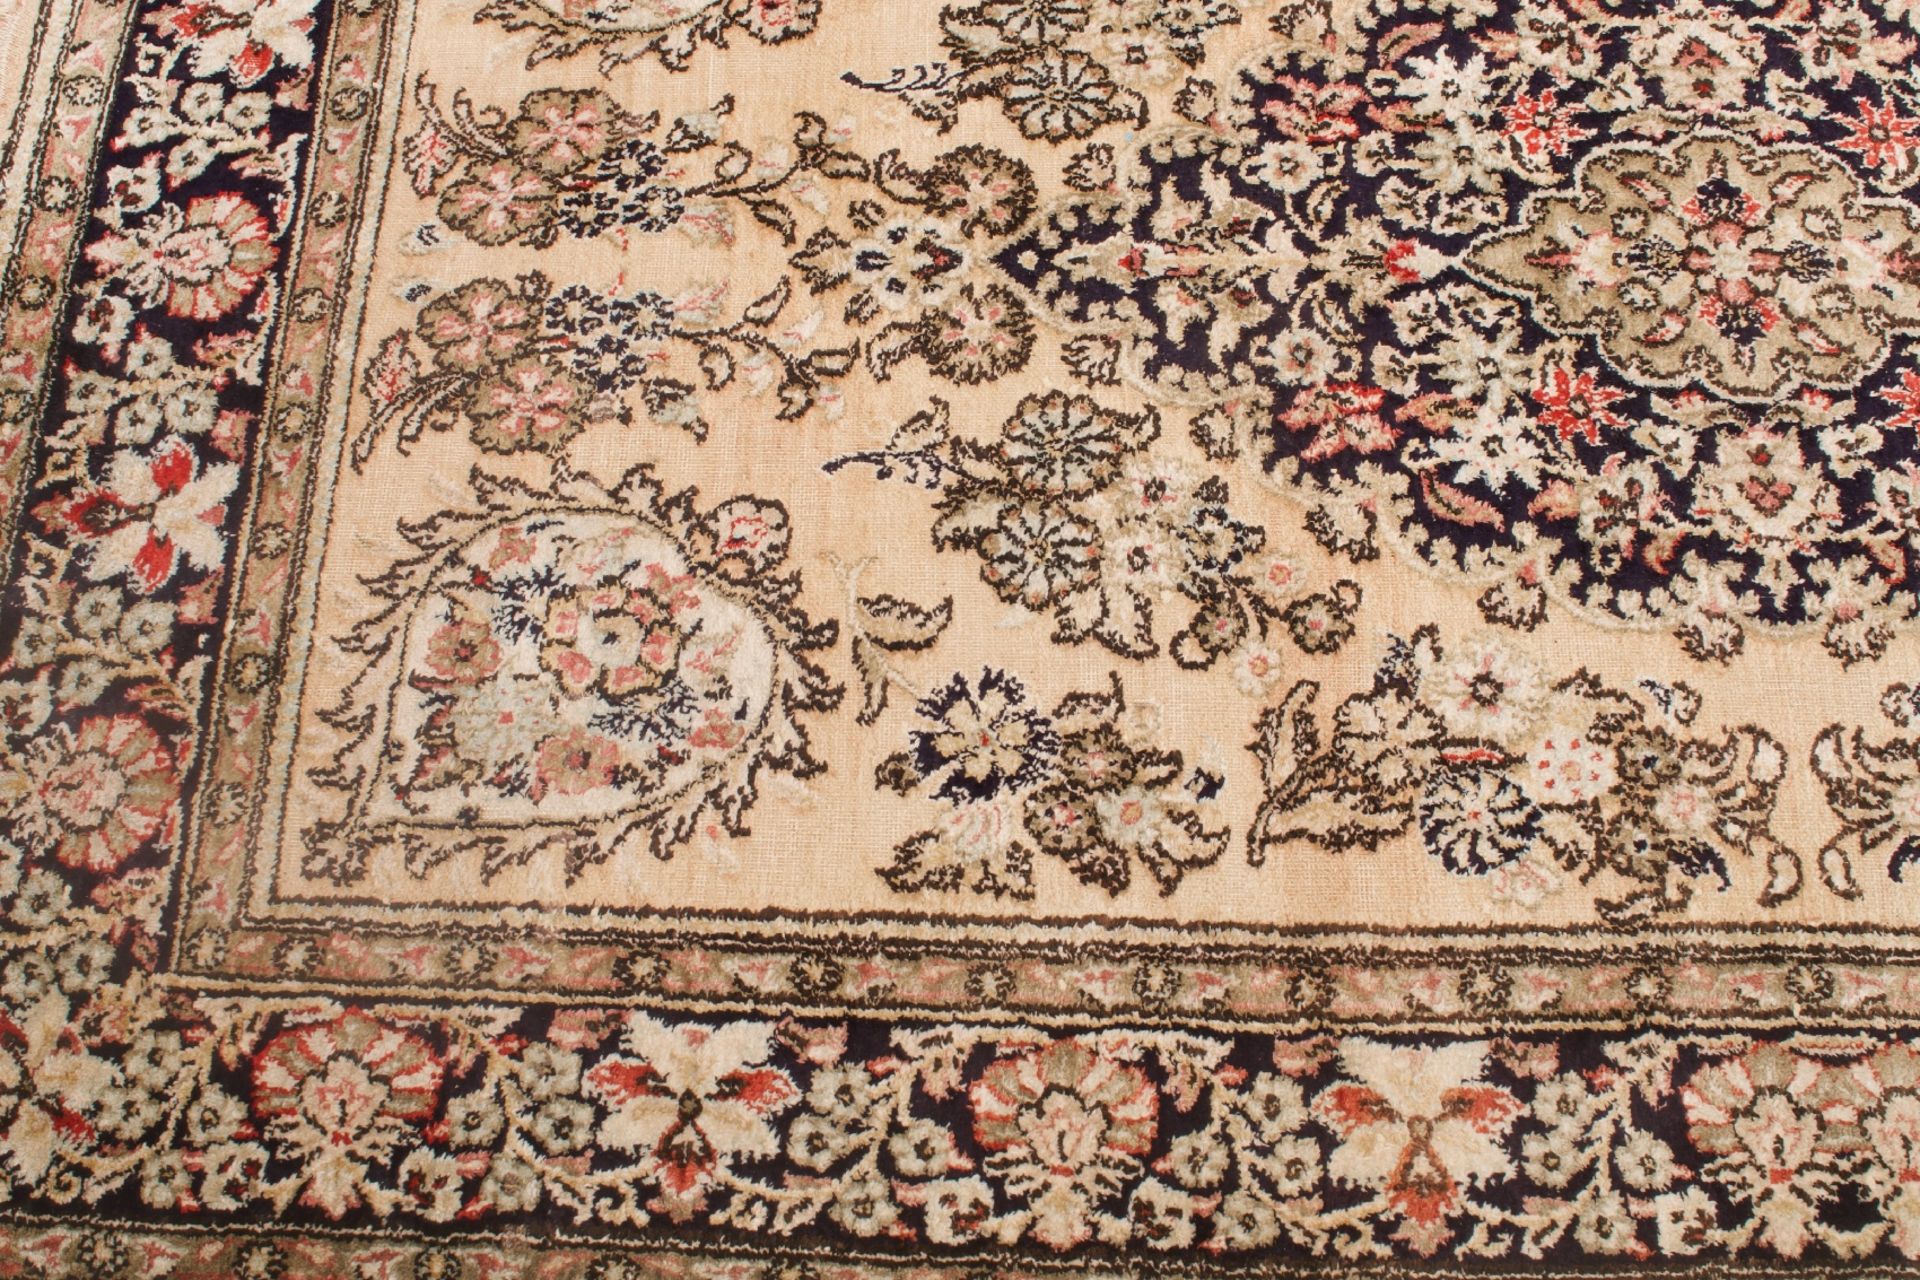 Ghom Seidenteppich Iran | Ghom silk carpet Iran - Image 3 of 6